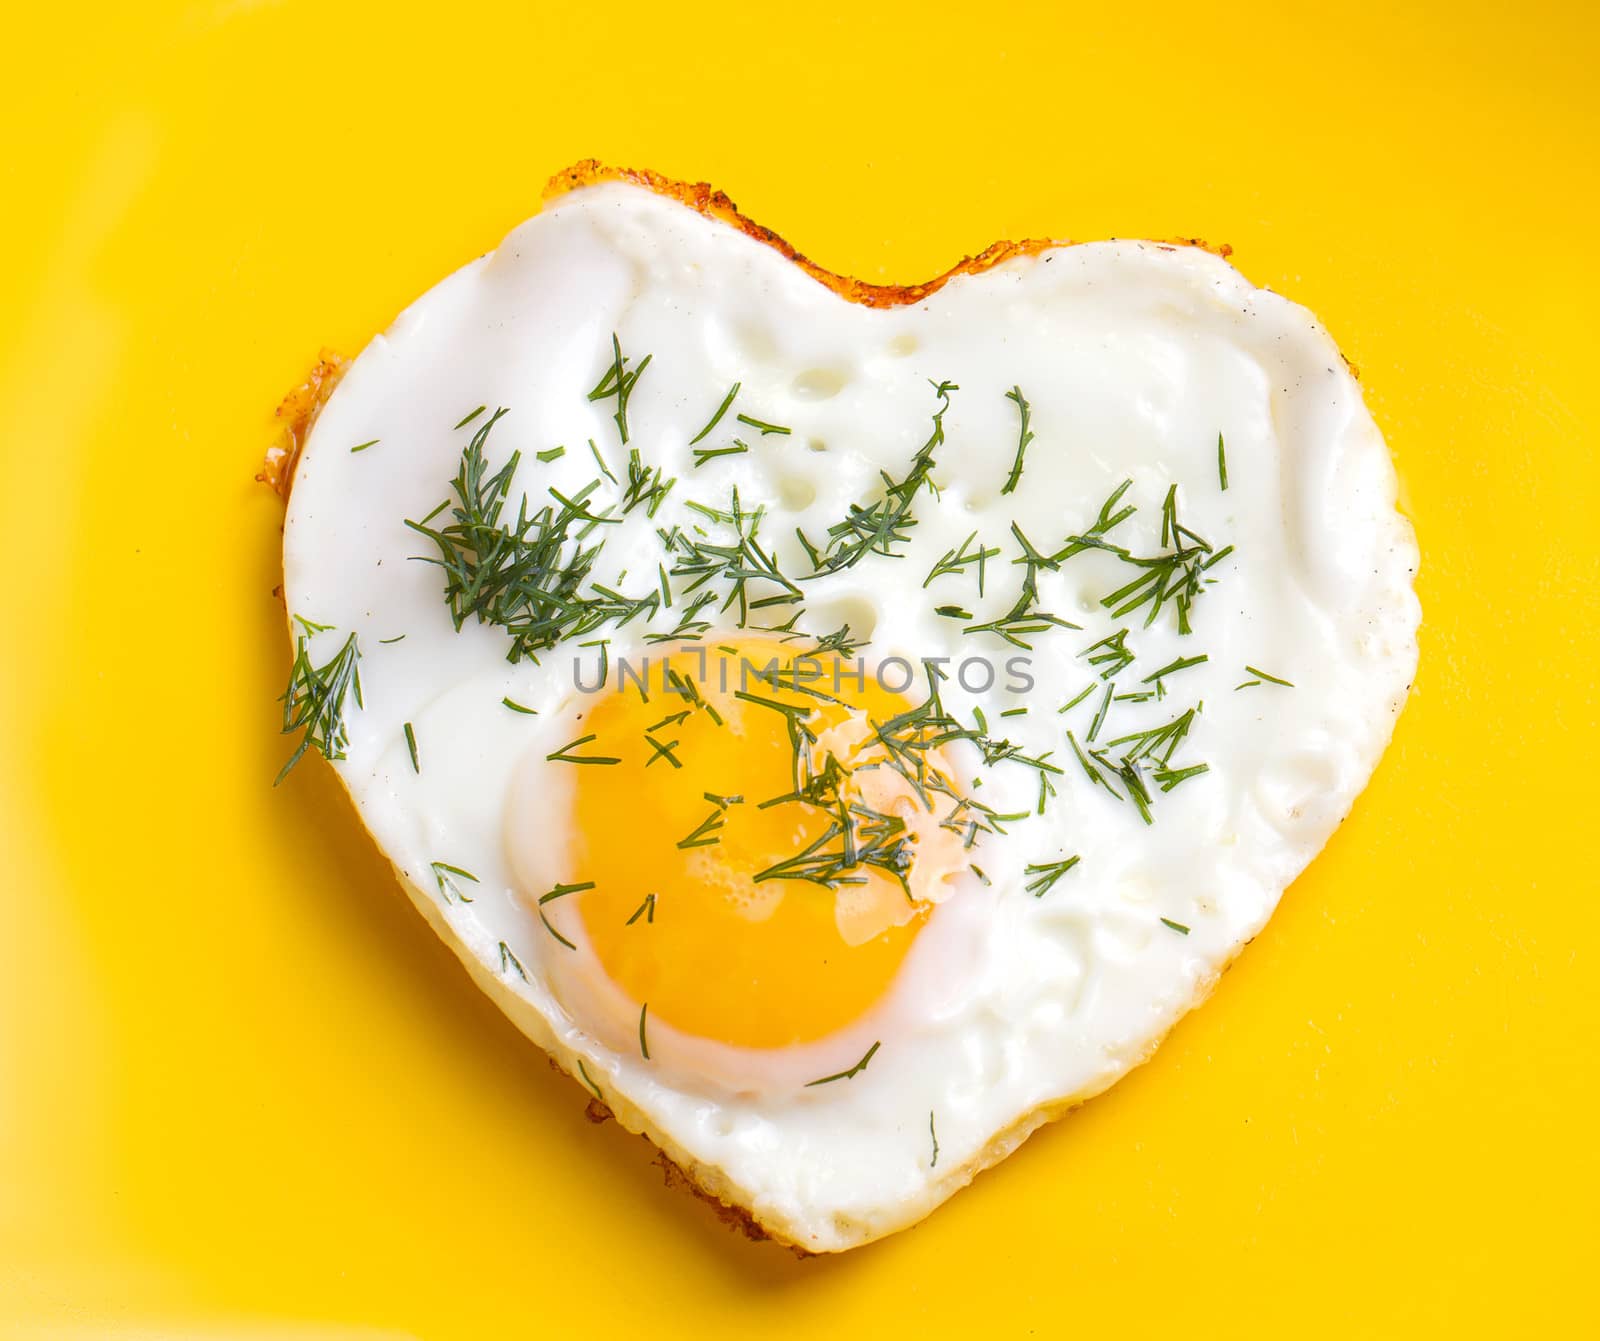 Breakfast. Fried eggs in a heart shape with dill